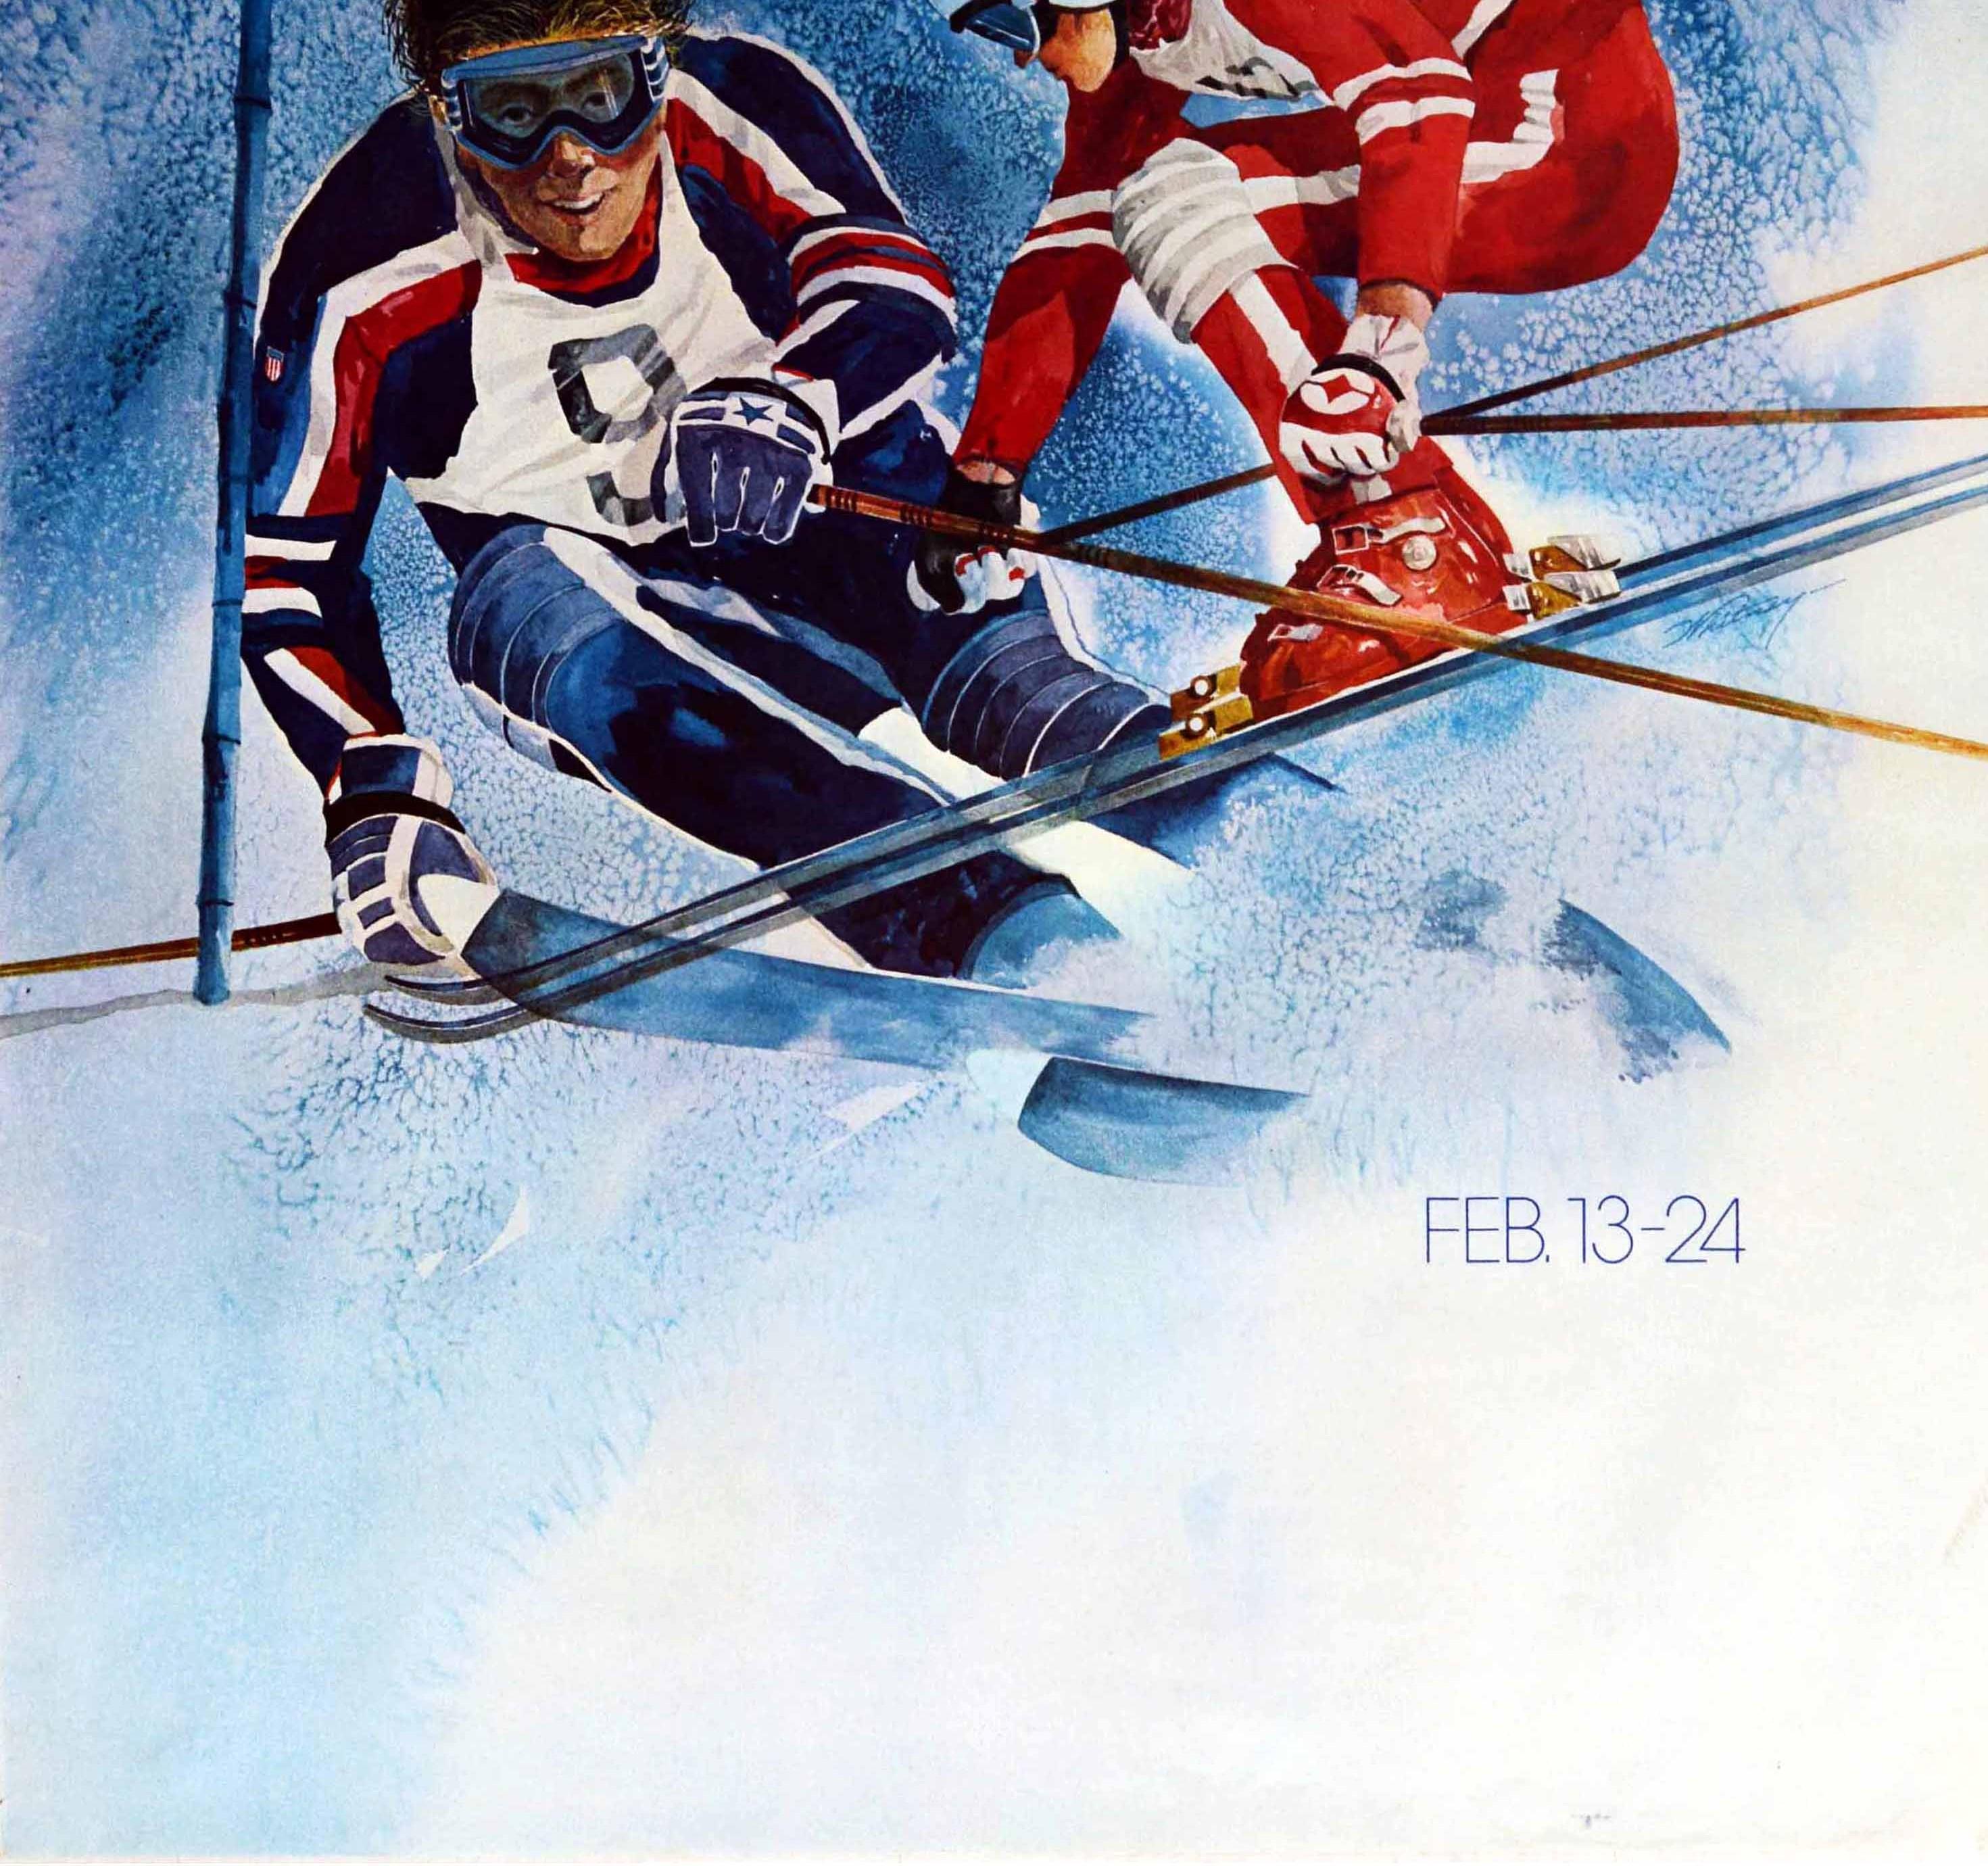 lake placid olympia 1980